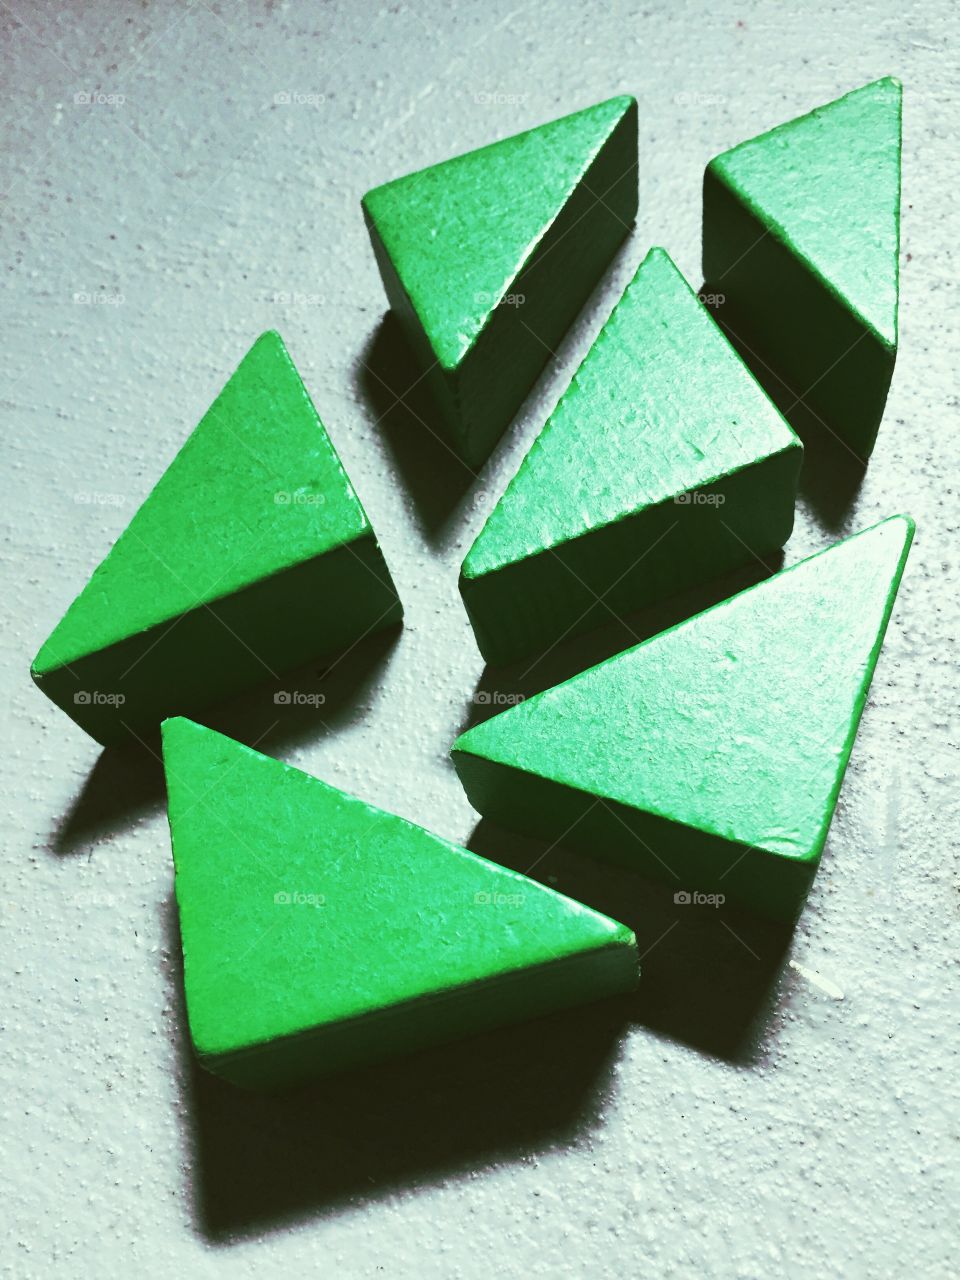 Green Color Story - green triangular blocks